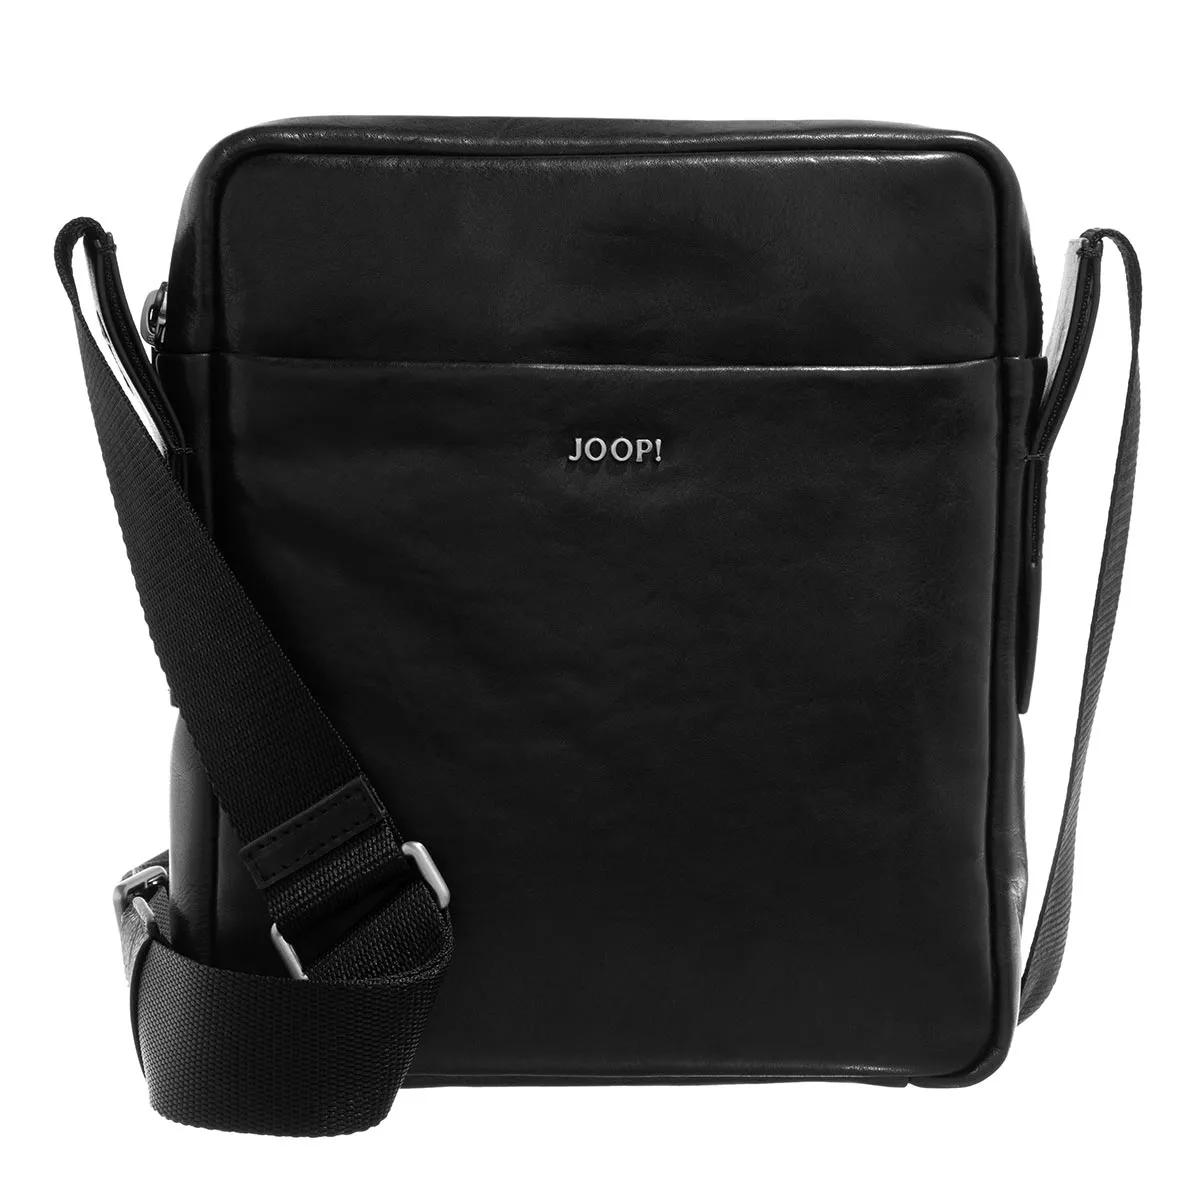 JOOP! Treviso Remus Shoulderbag Crossbody Xsvz Black Bag 